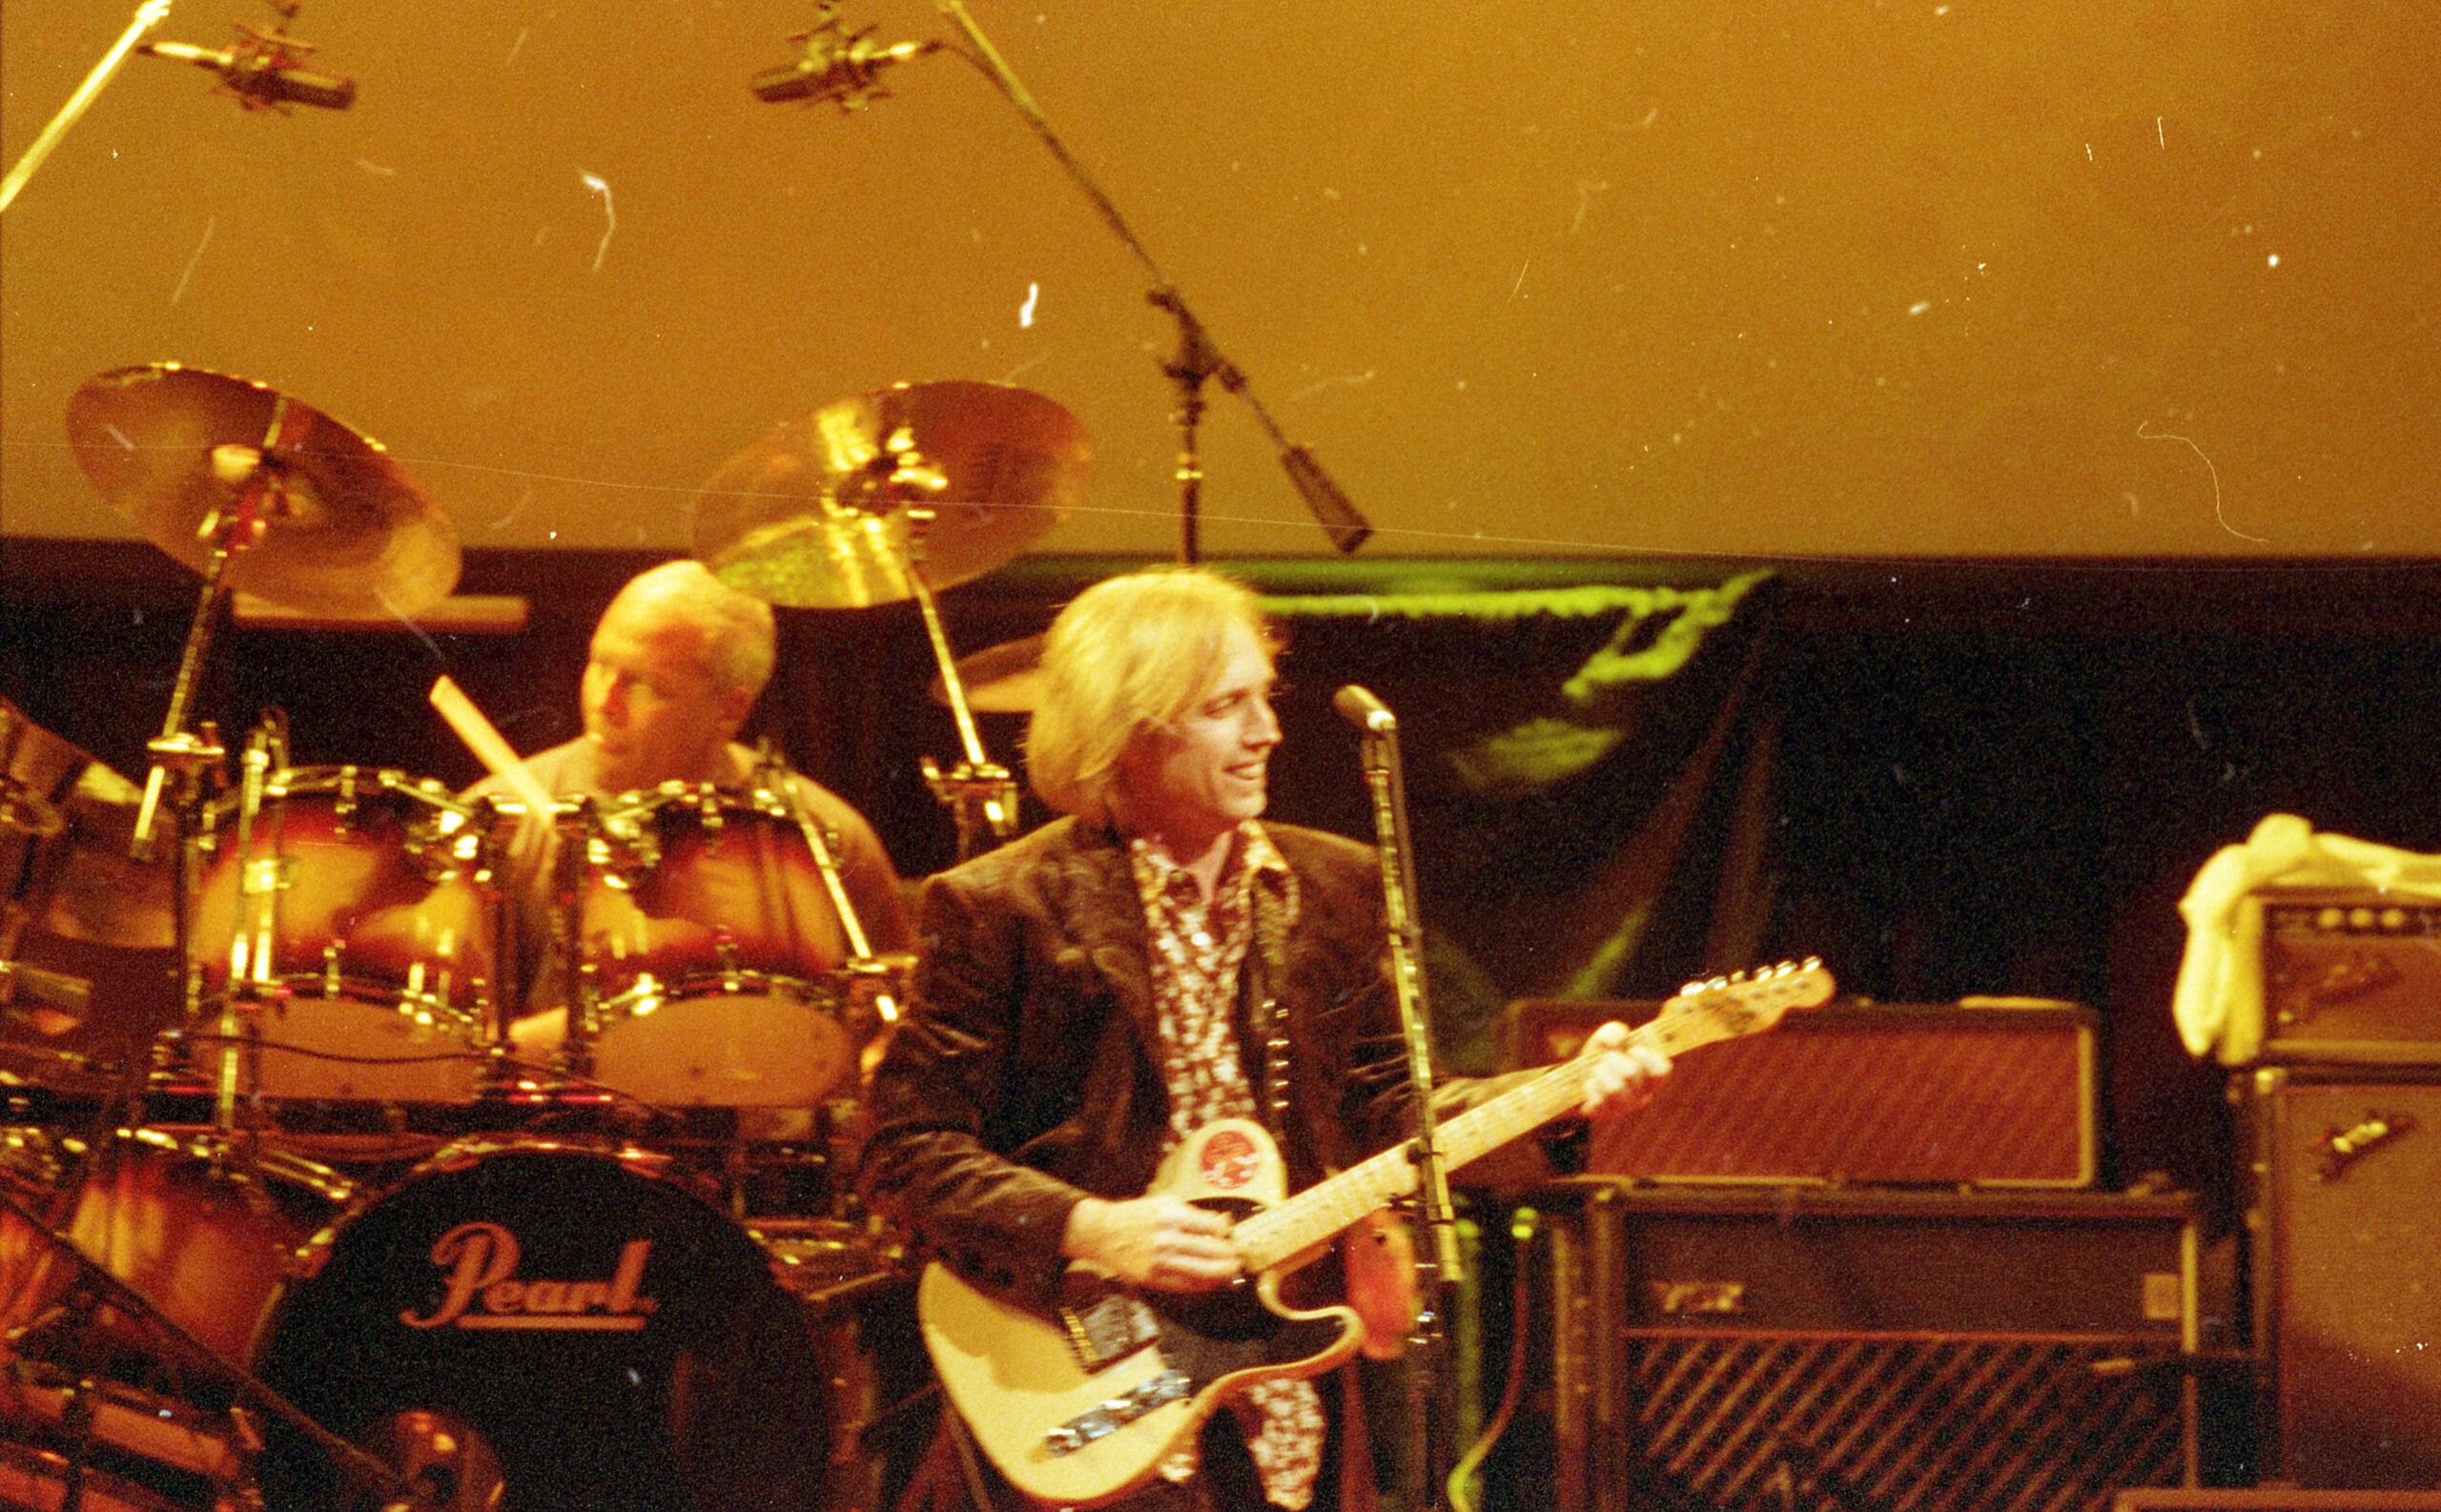 Tom Petty an the Heartbreakers